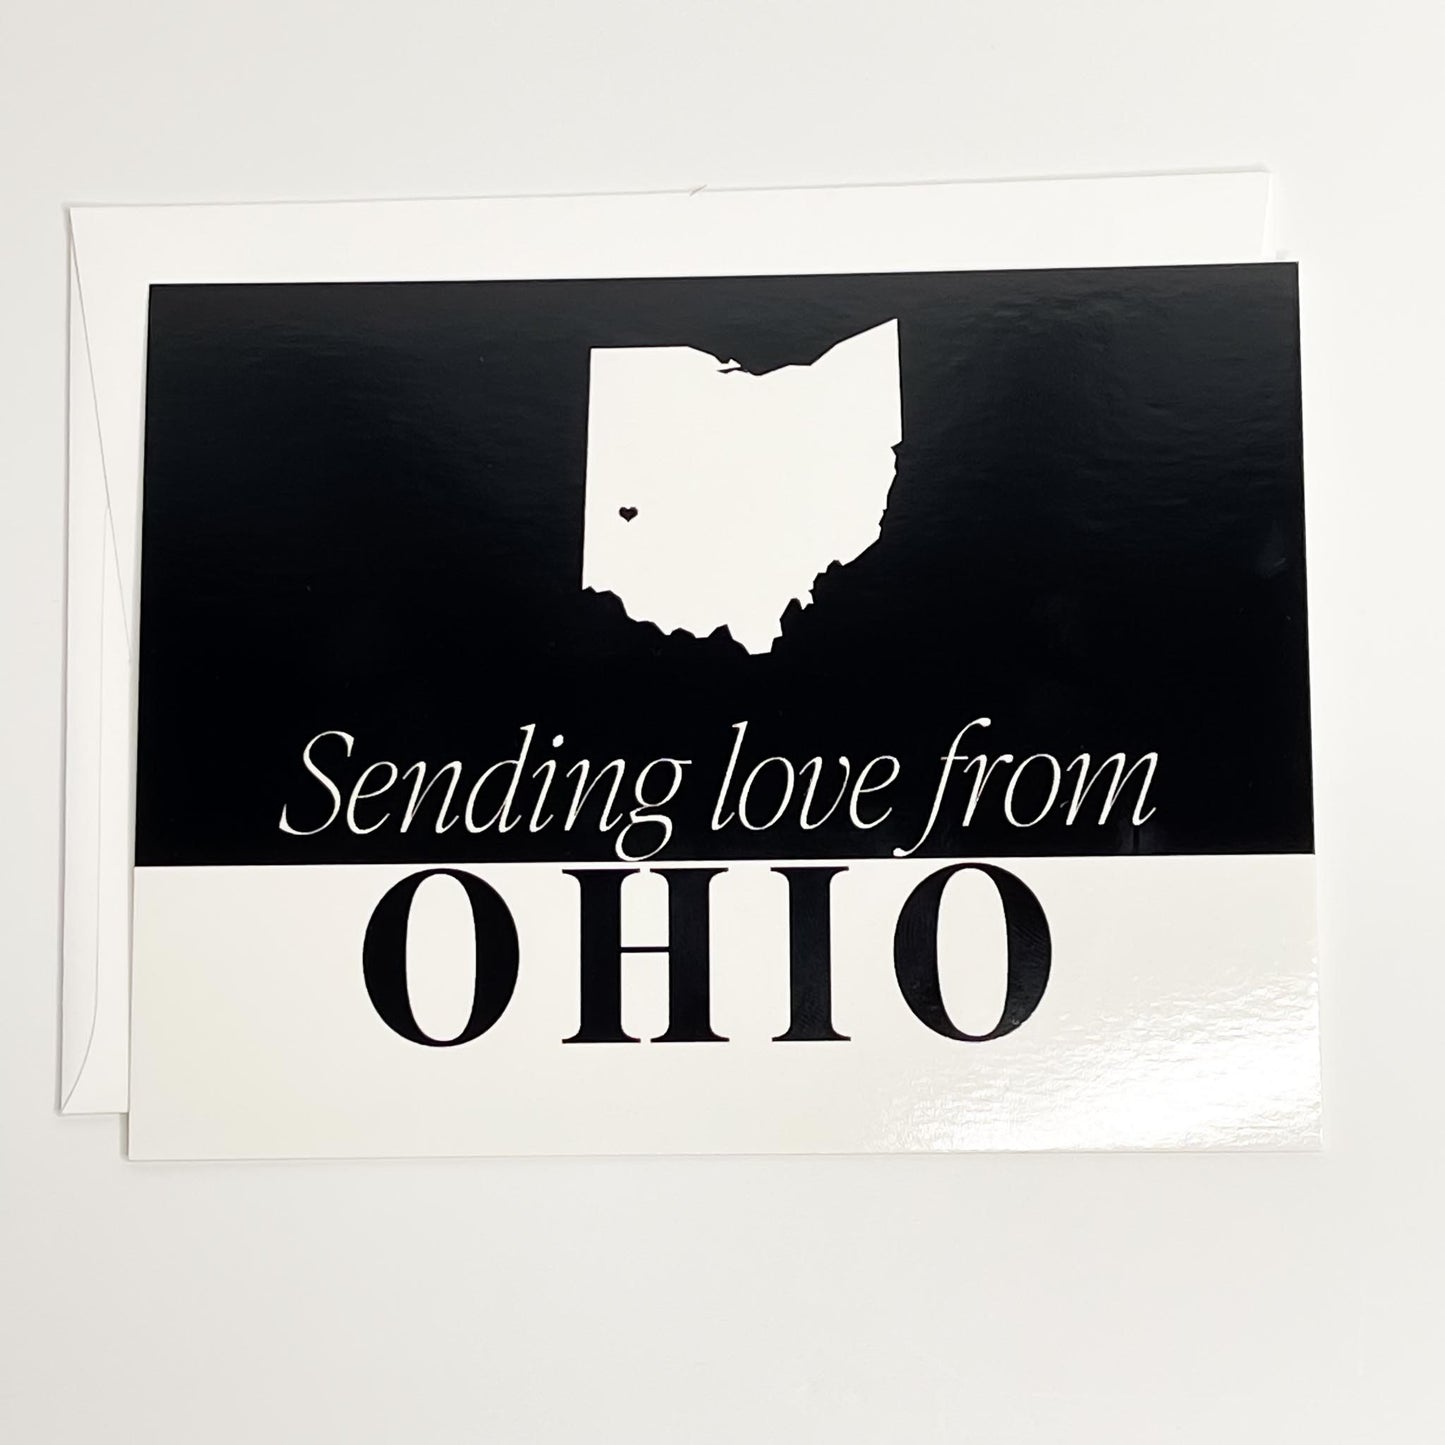 Sending love from Ohio - Postcard